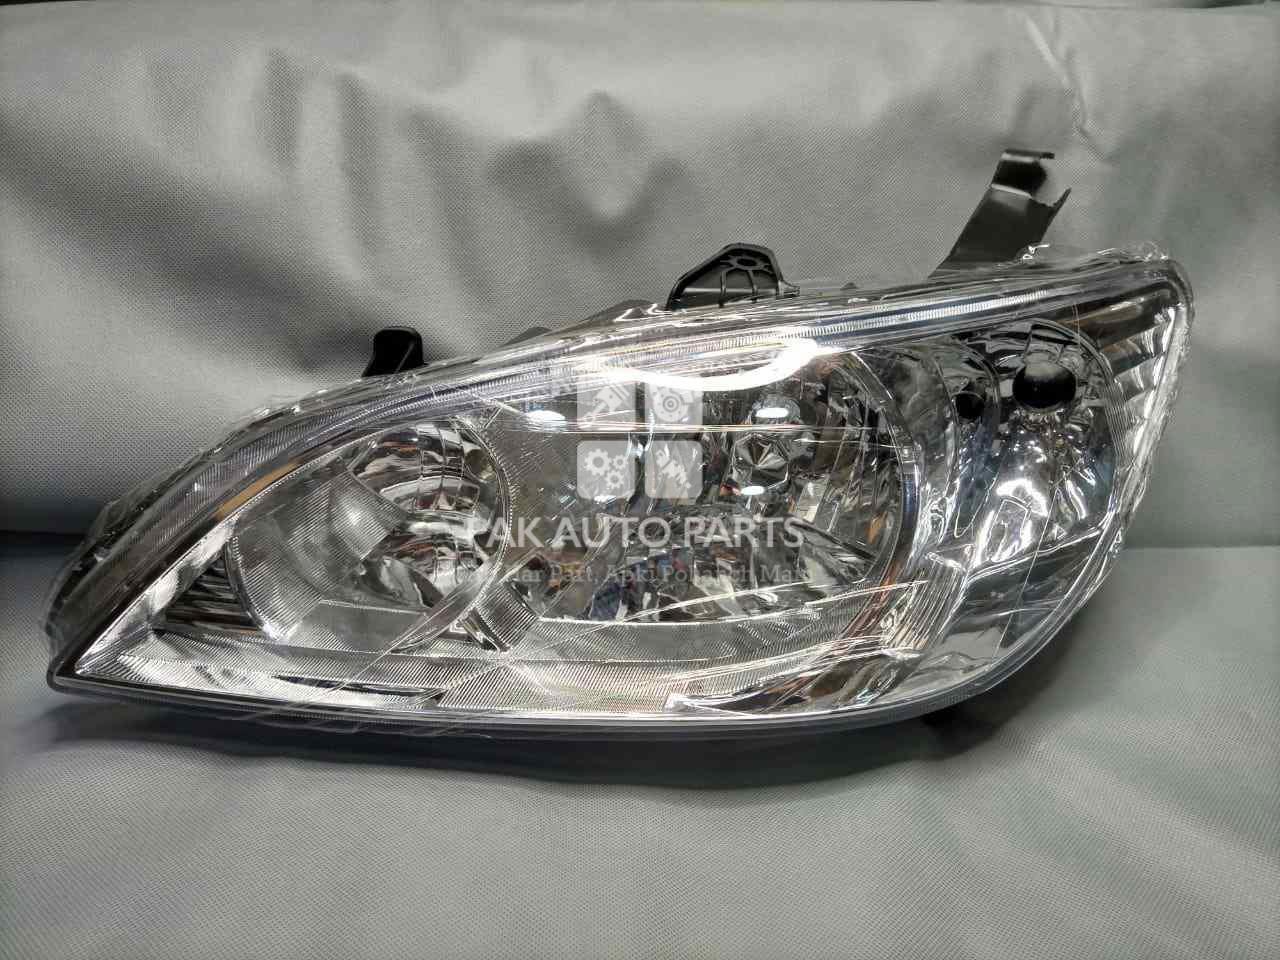 Picture of Honda Civic 2005 Headlight